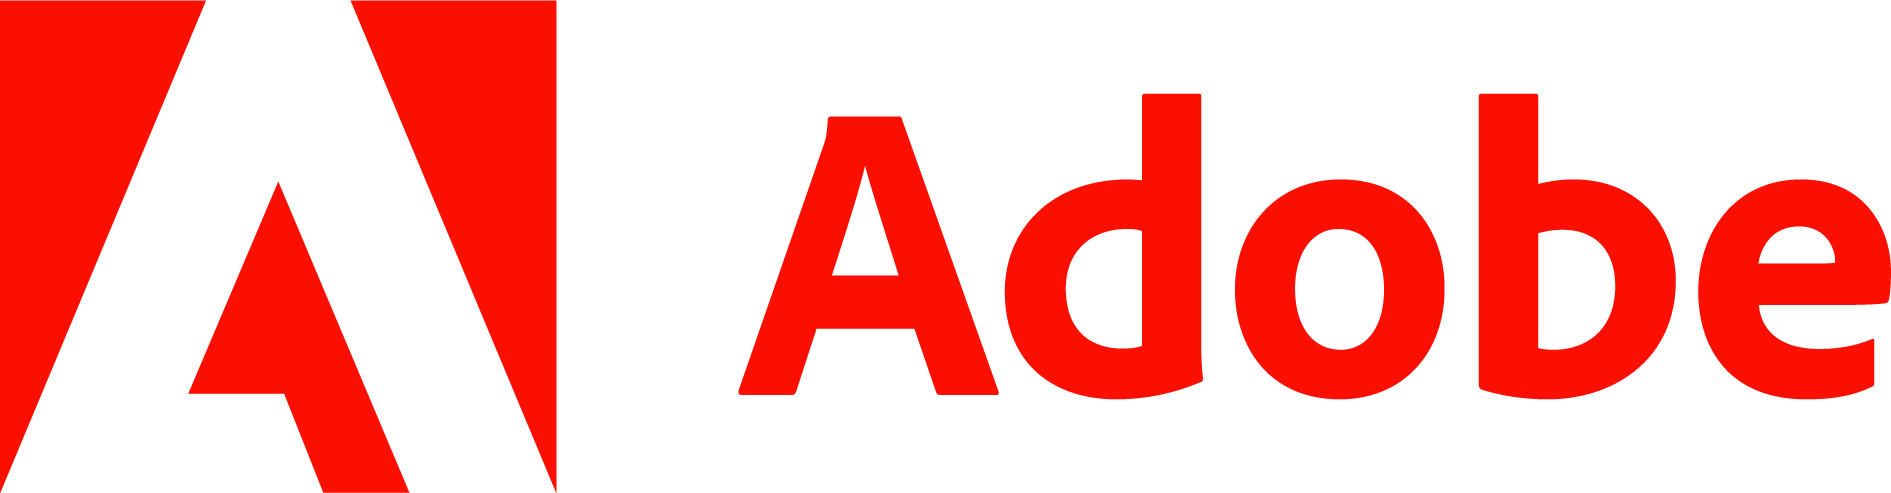 Adobe's 'A' Logo in red